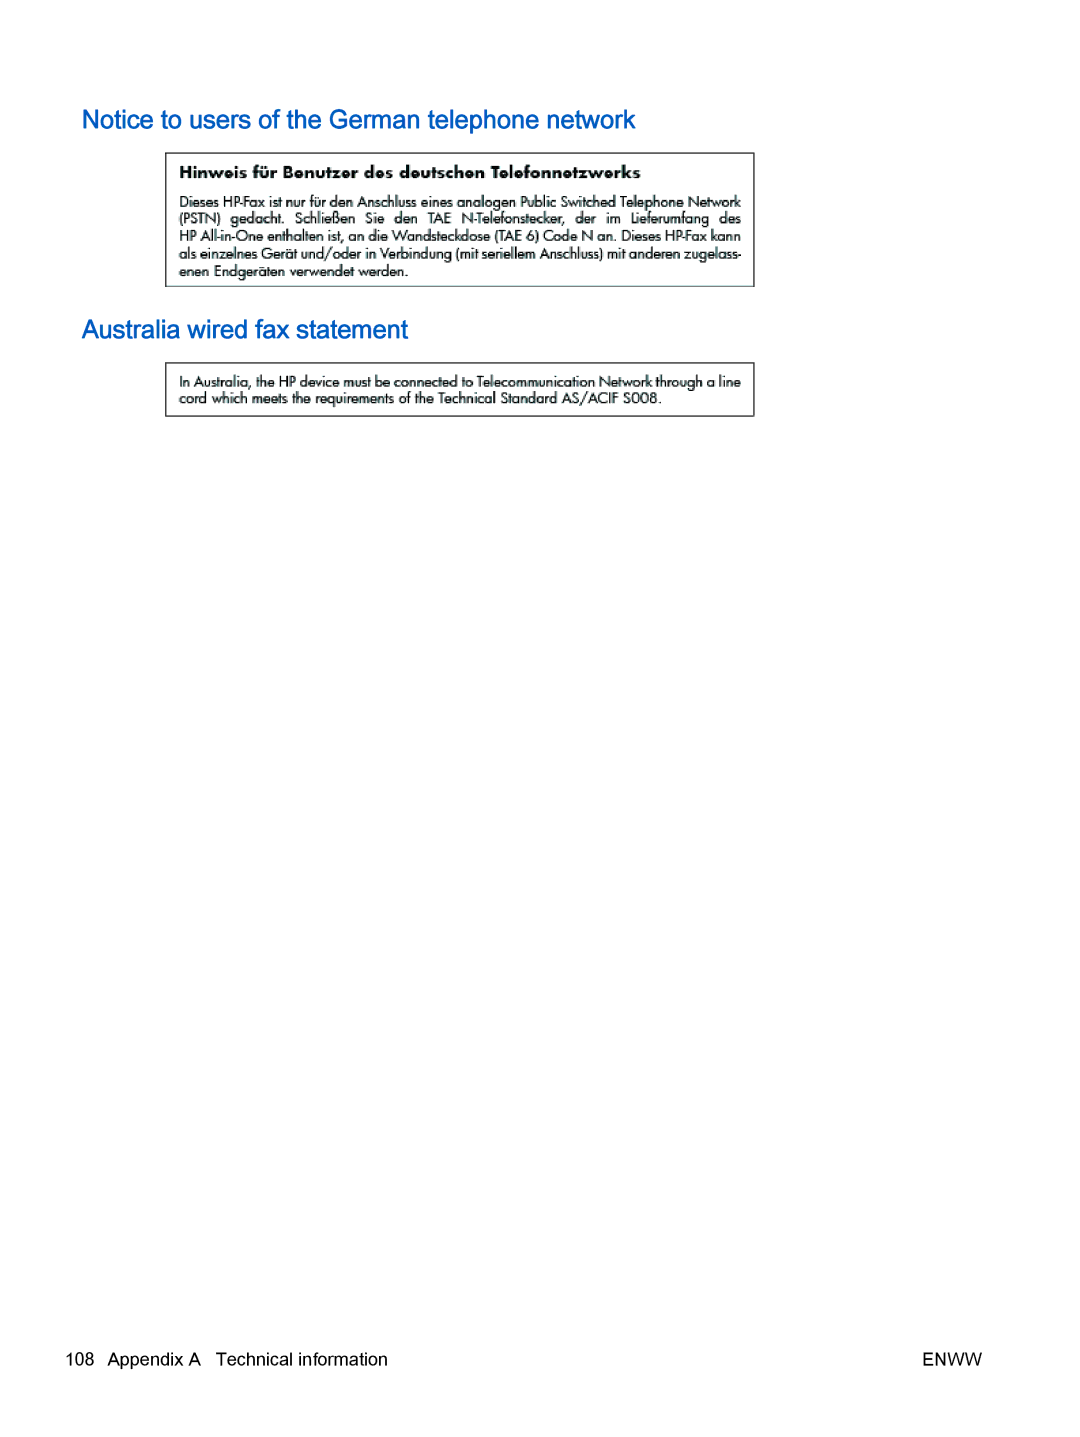 HP 2622, 2621 manual Australia wired fax statement 